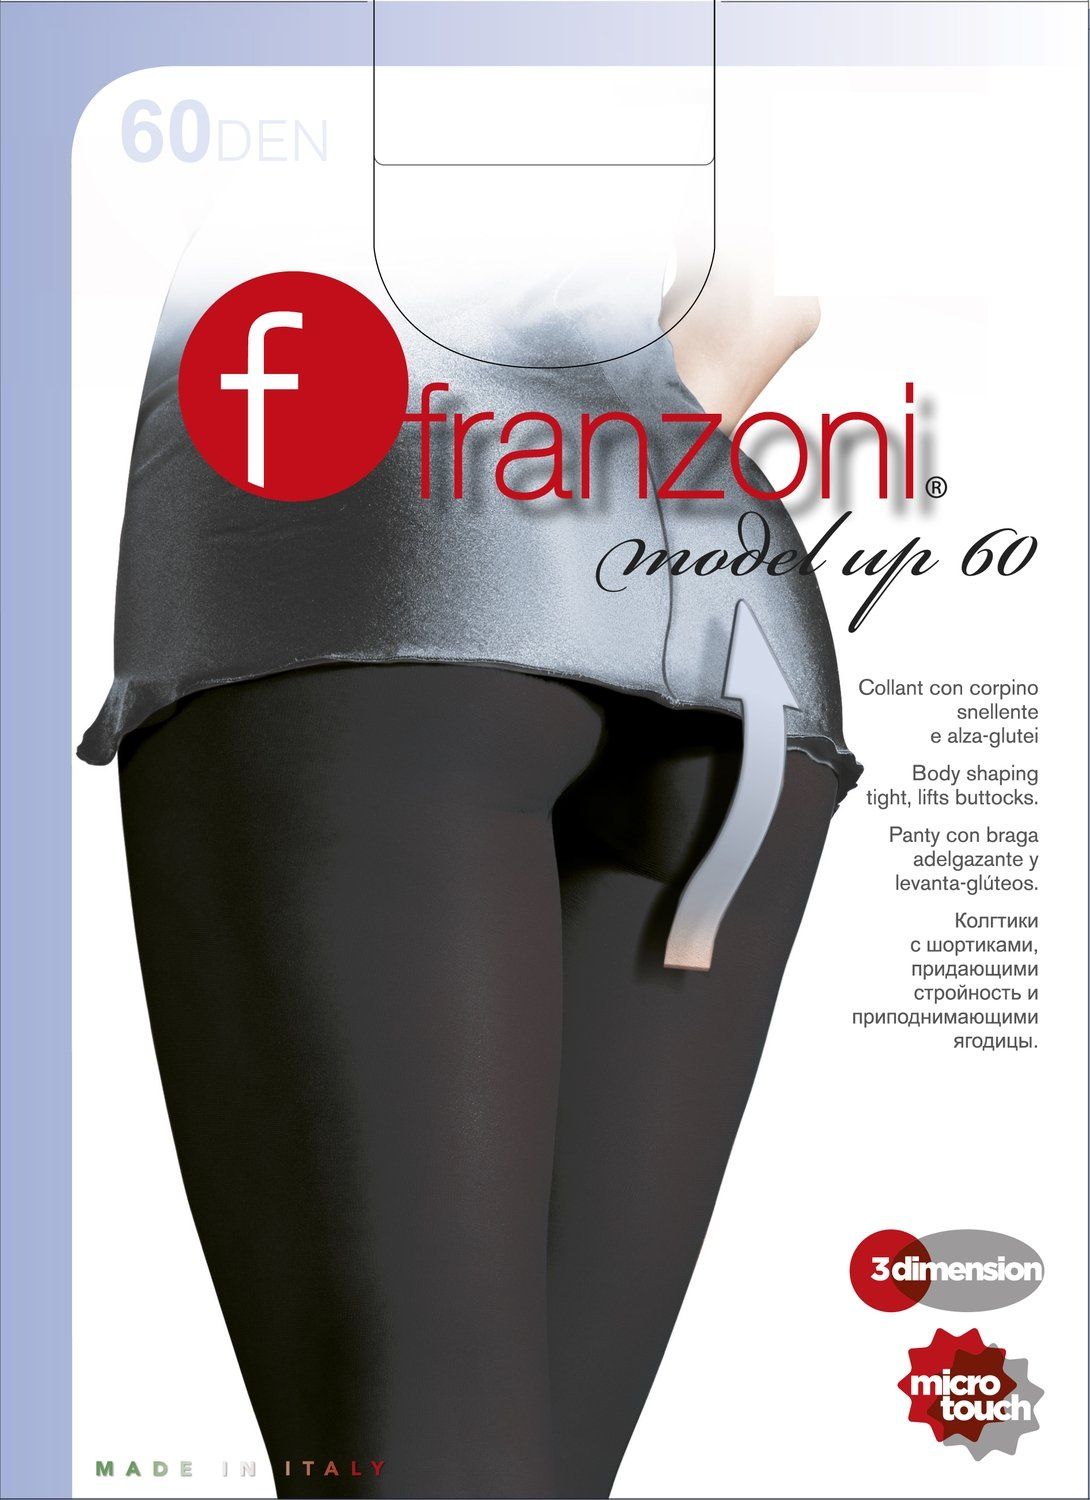  Franzoni Model-Up 60--2 , 44 